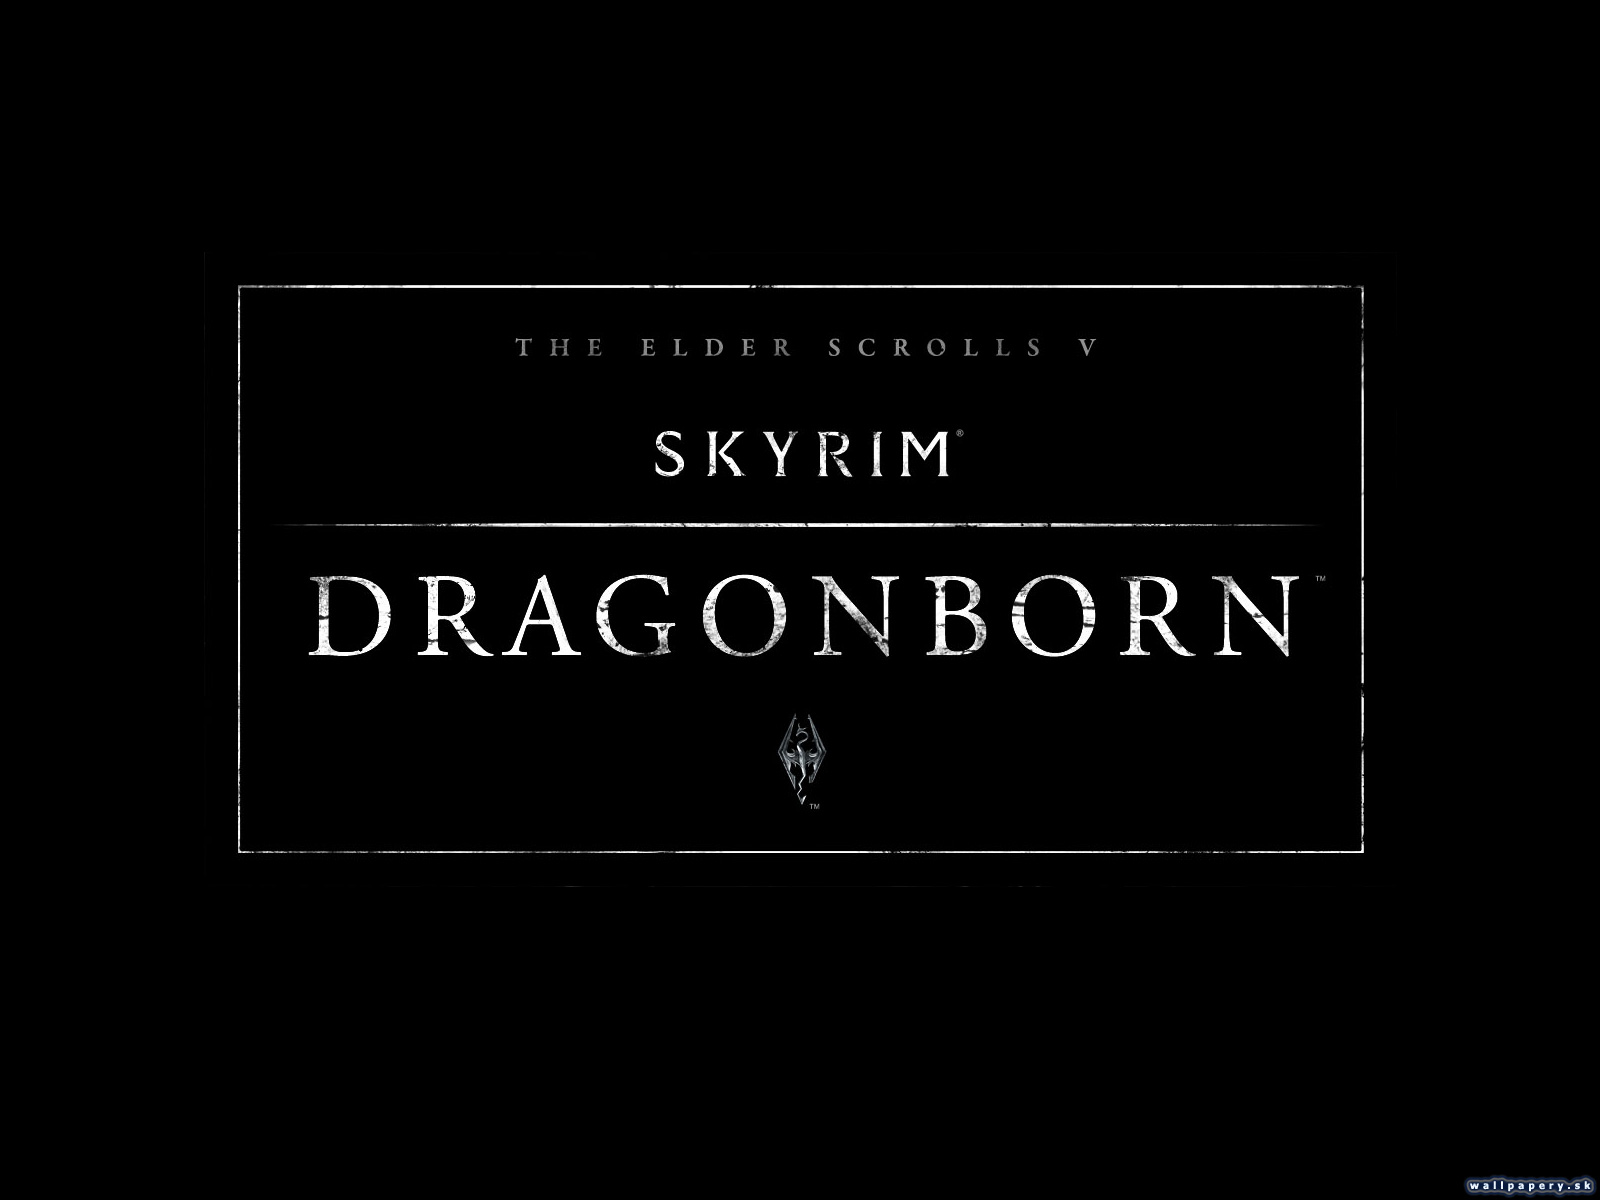 The Elder Scrolls V: Skyrim - Dragonborn - wallpaper 2